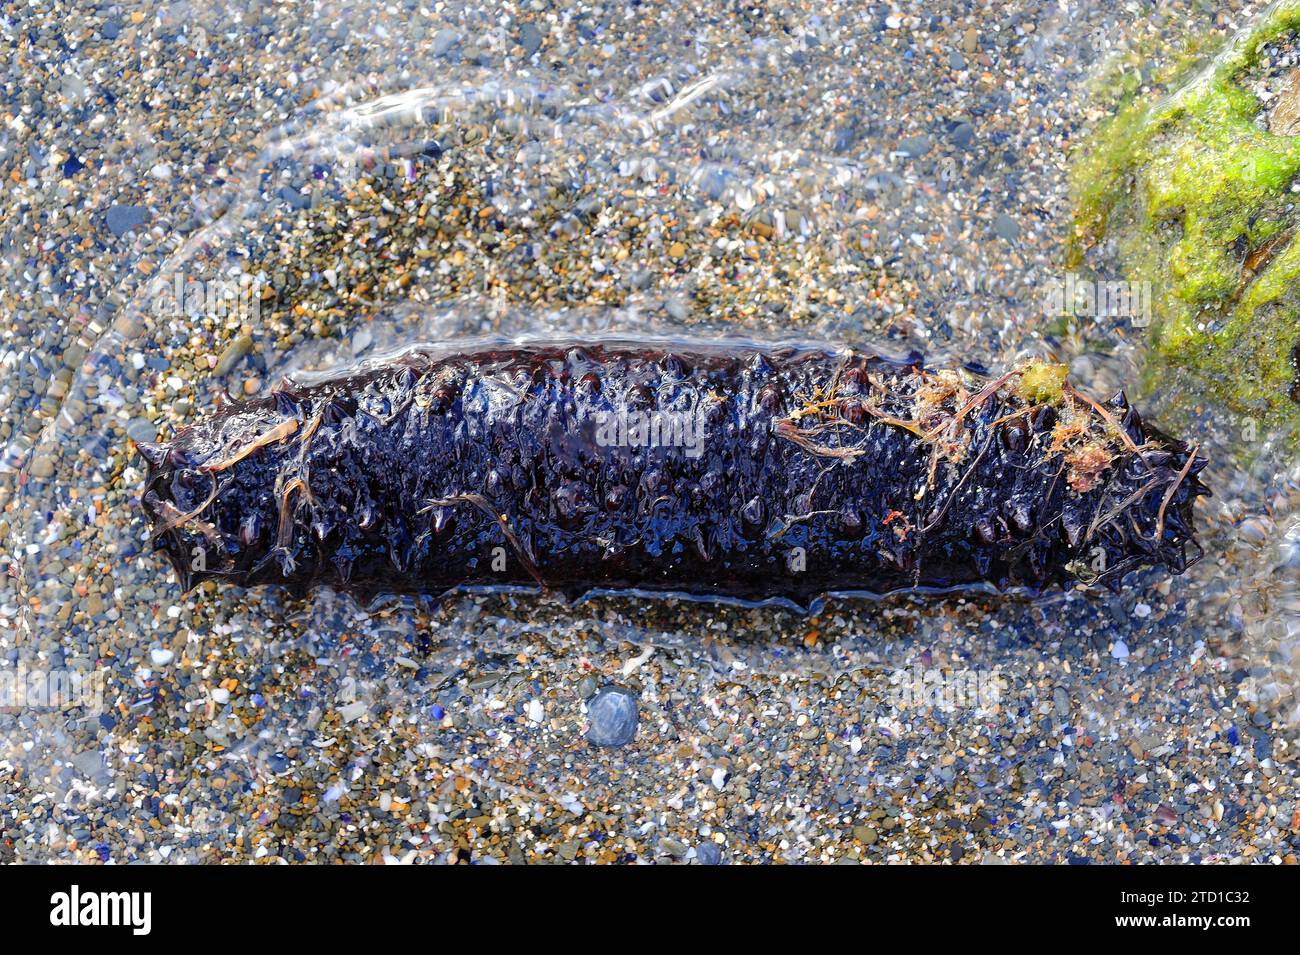 Black sea cucumber (Holothuria forskali). This photo was taken in Cap Creus, Girona province, Catalonia, Spain. Stock Photo